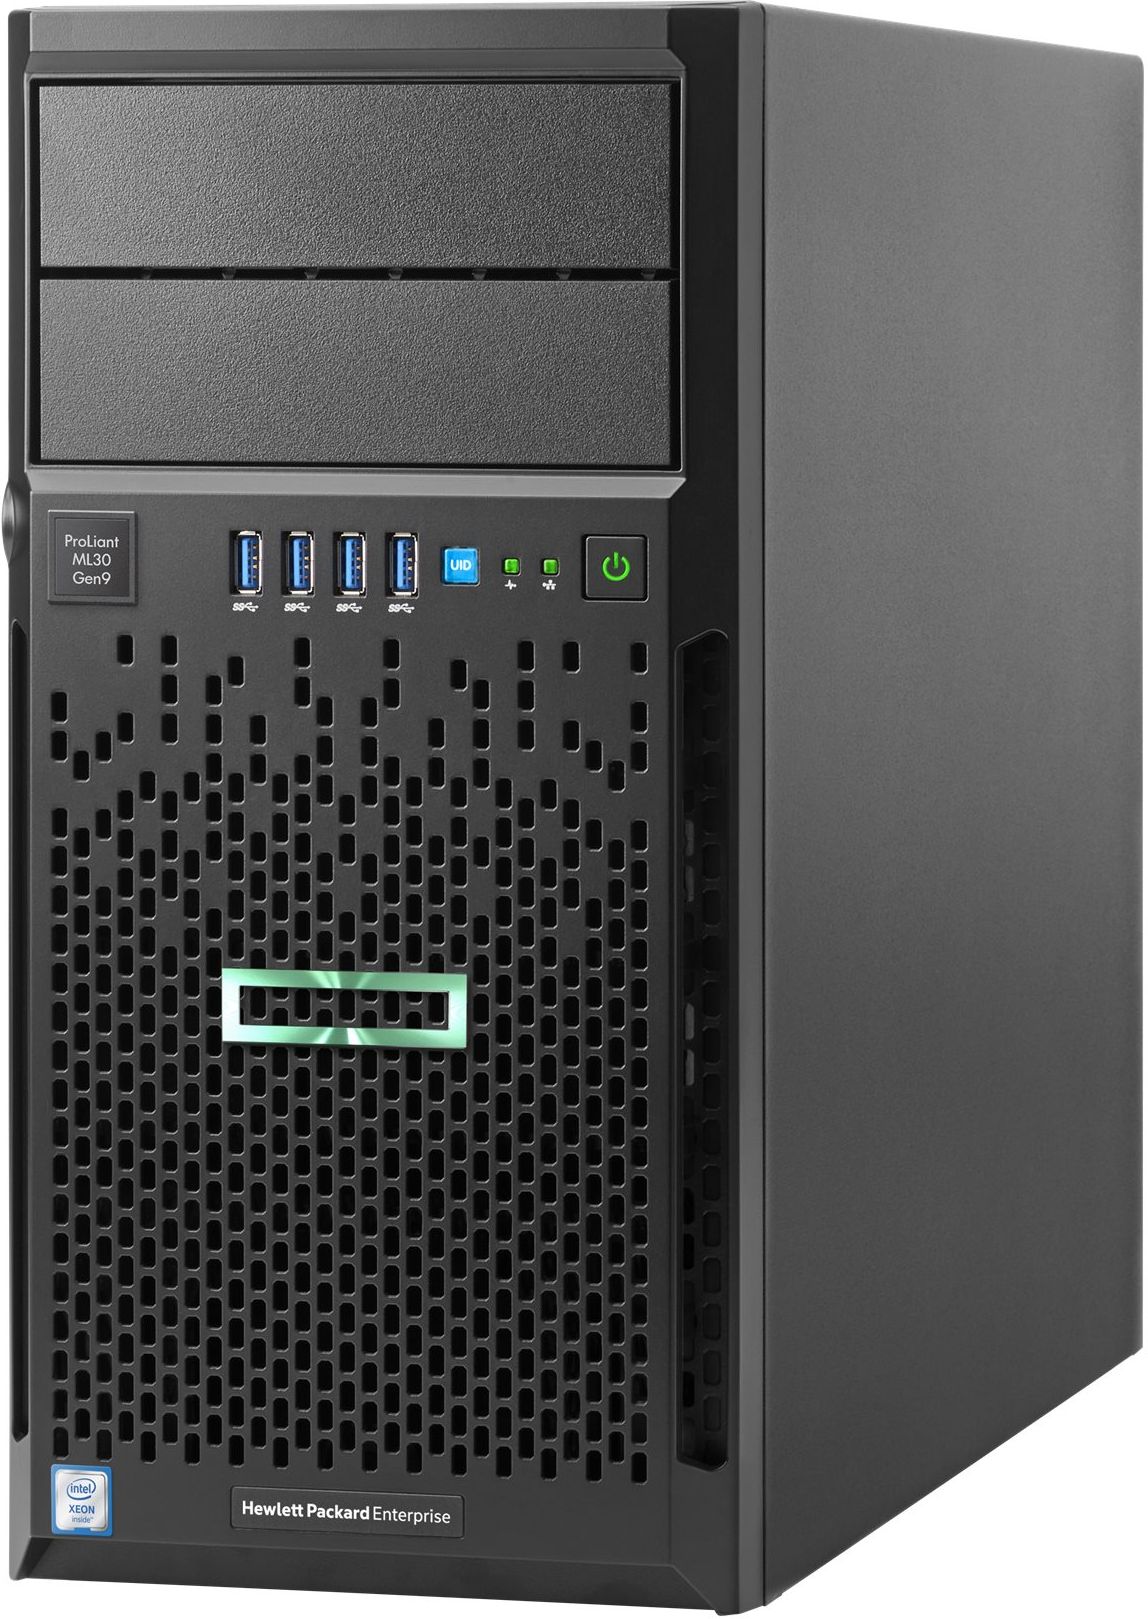 Сервер HP ProLiant ML30 Gen9 E3-1220v6 Hot Plug Tower(4U)/Xeon4C 3.0GHz(8MB)/1x8GBU1D_2400/B140i(ZM/RAID 0/1/10/5)/noHDD(4)LFF/noDVD/iLOstd(no port)/1